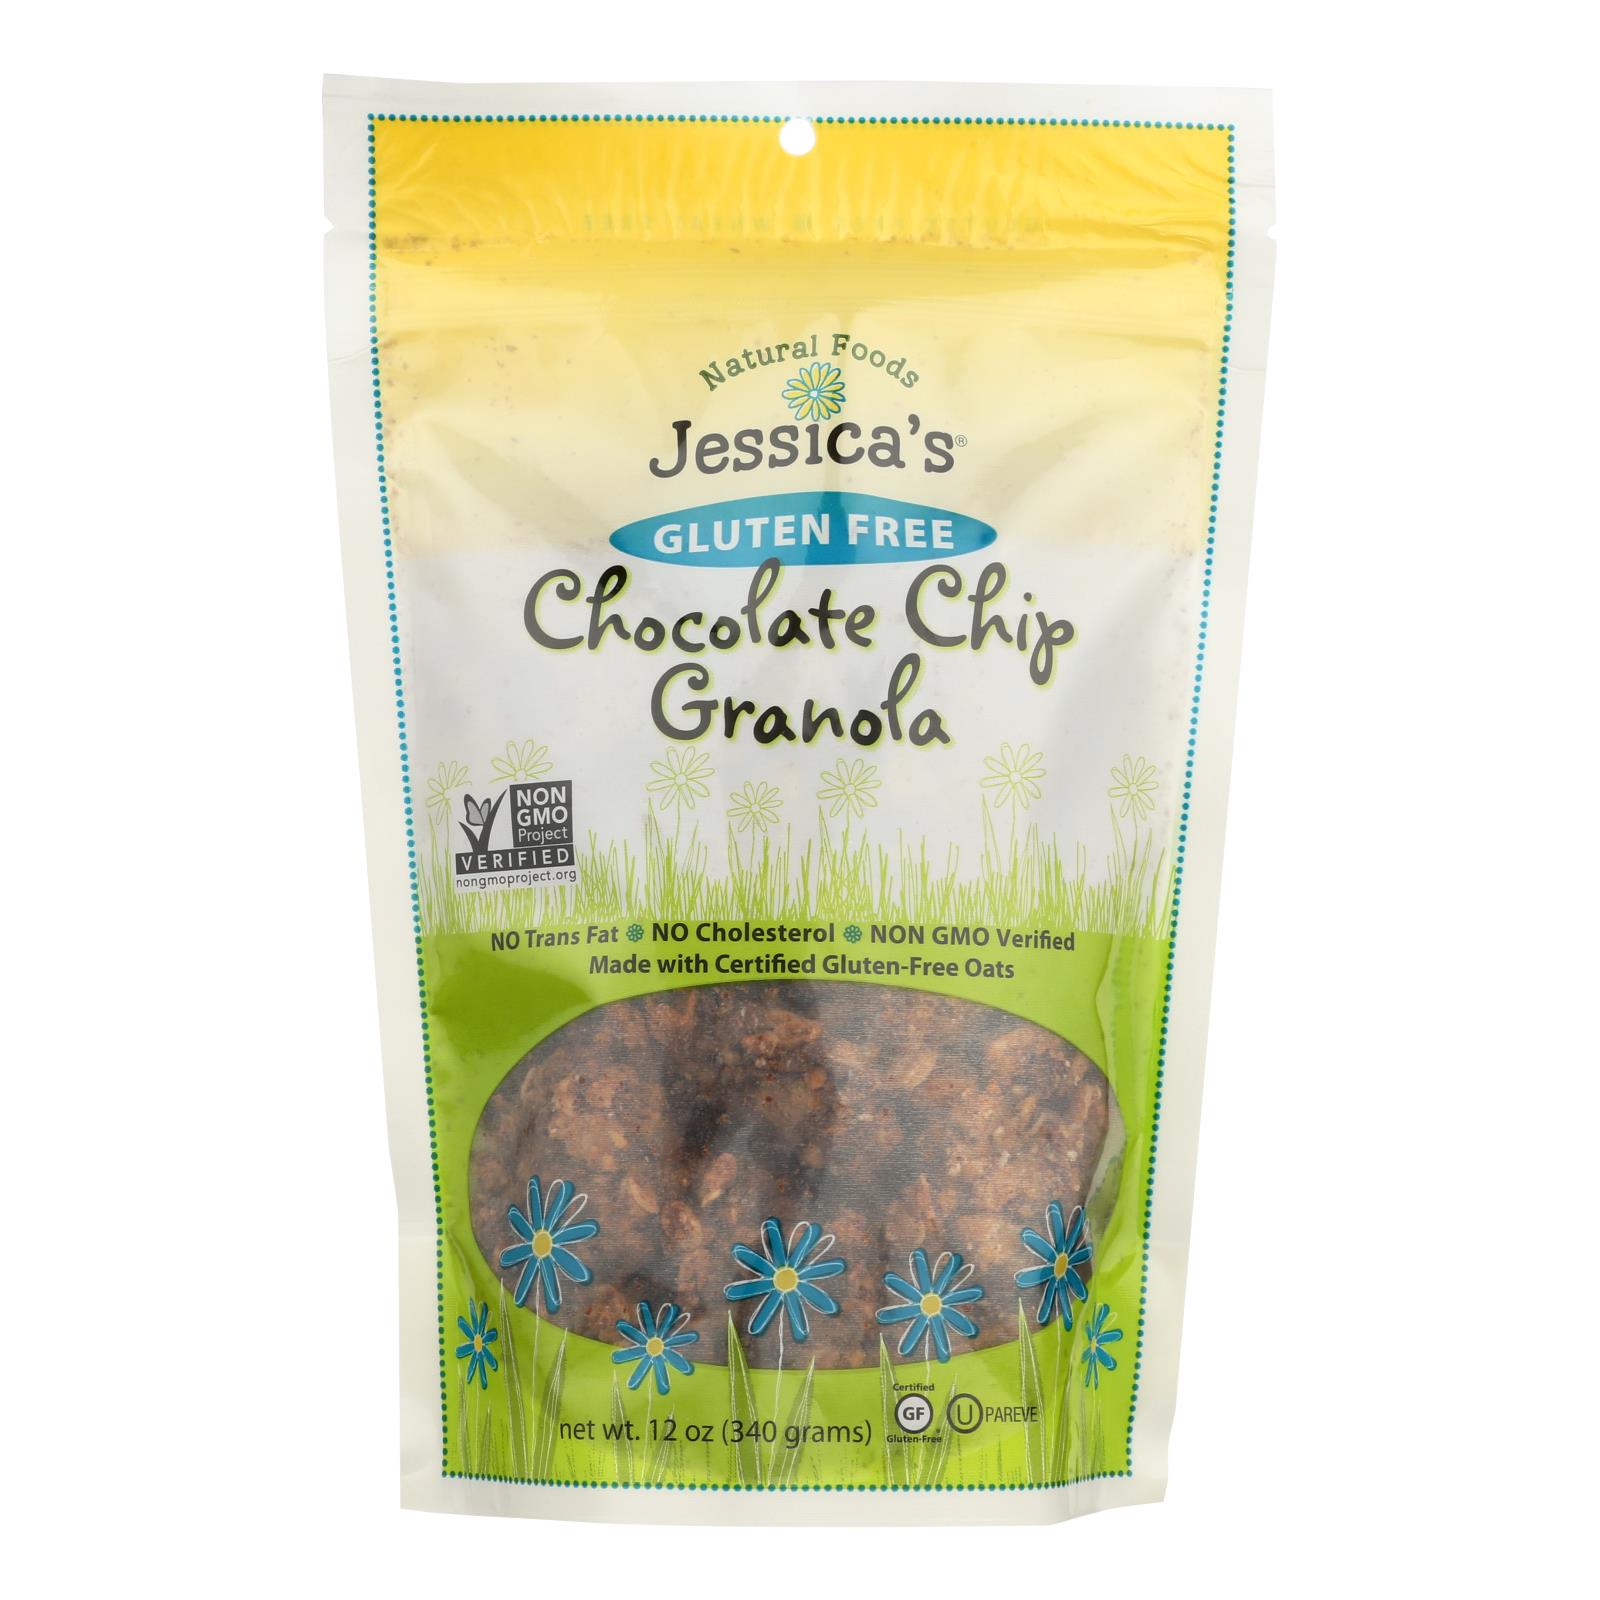 Jessica's Natural Foods Gluten Free Chocolate Chip Granola - 12개 묶음상품 - 11 OZ